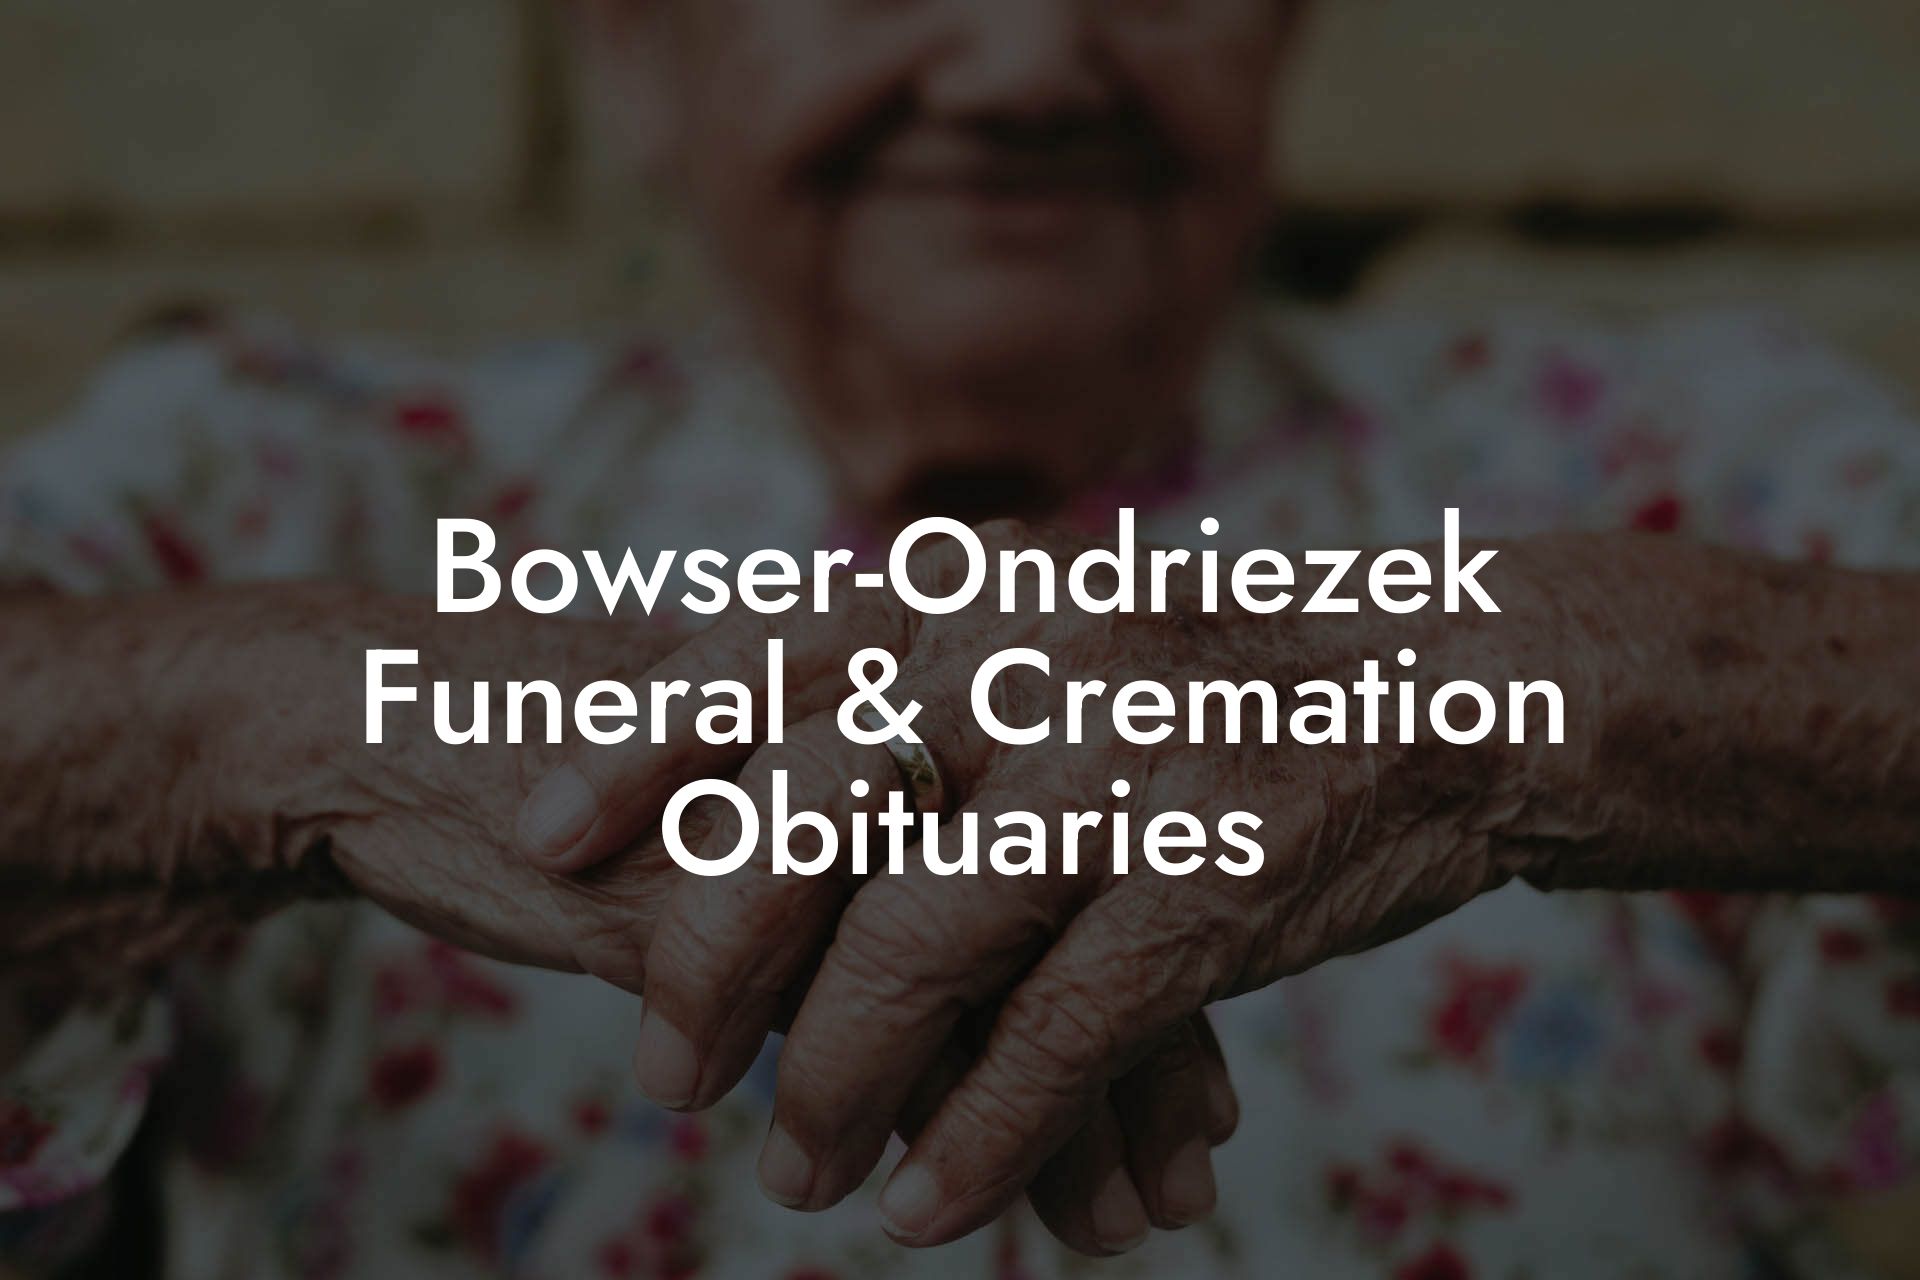 Bowser-Ondriezek Funeral & Cremation Obituaries